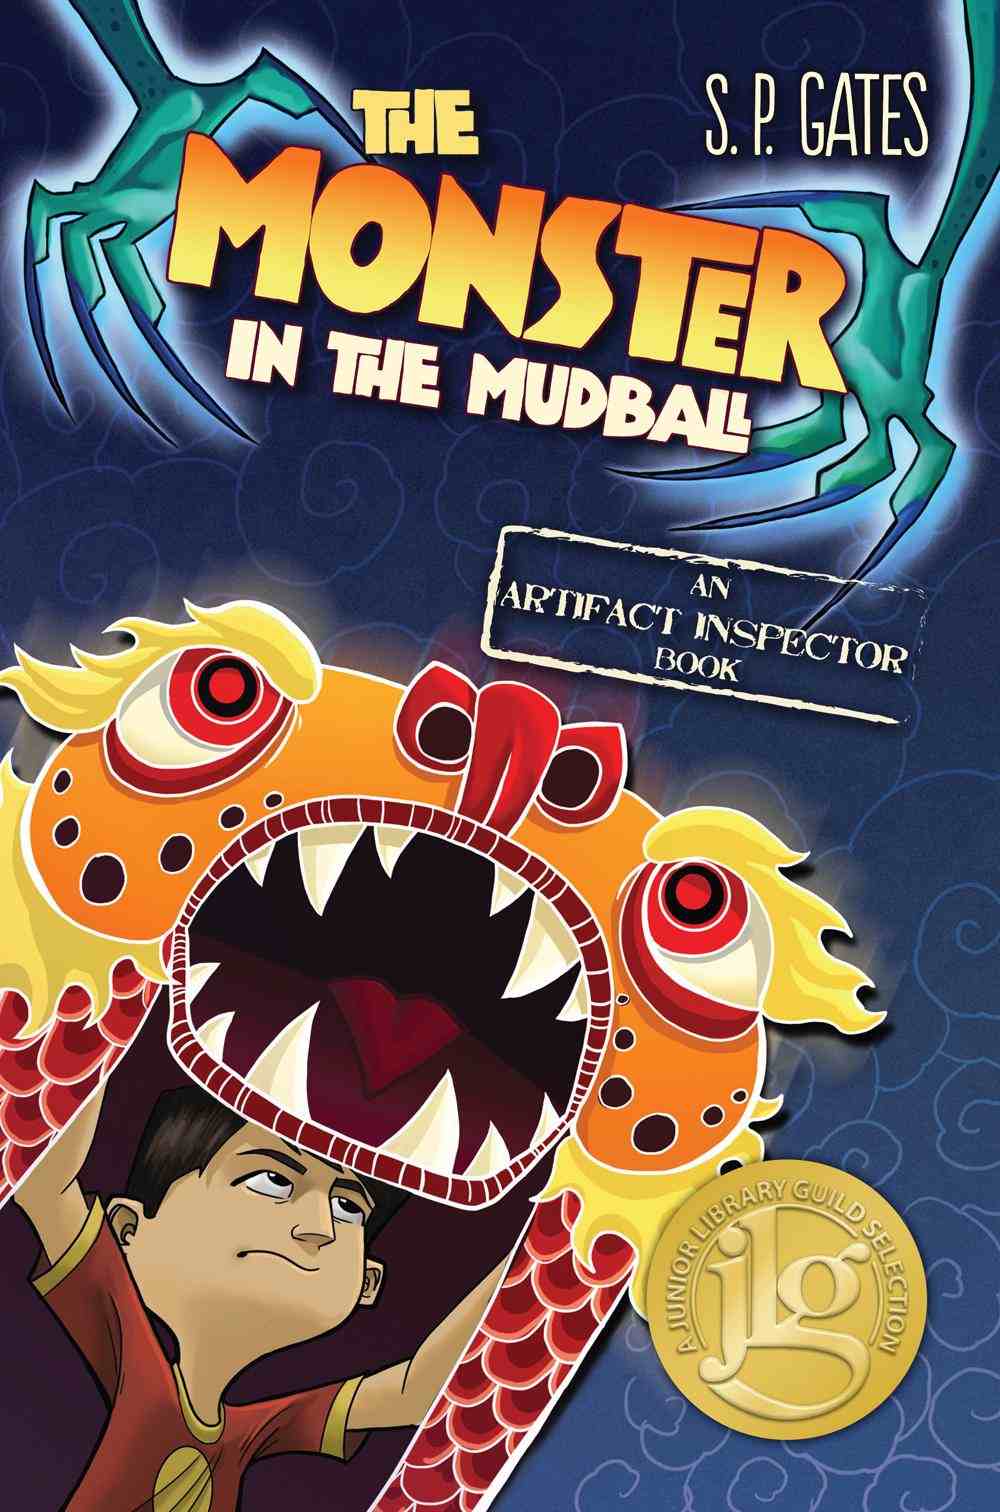 The Monster in the Mudball: An Artifact Inspector Book